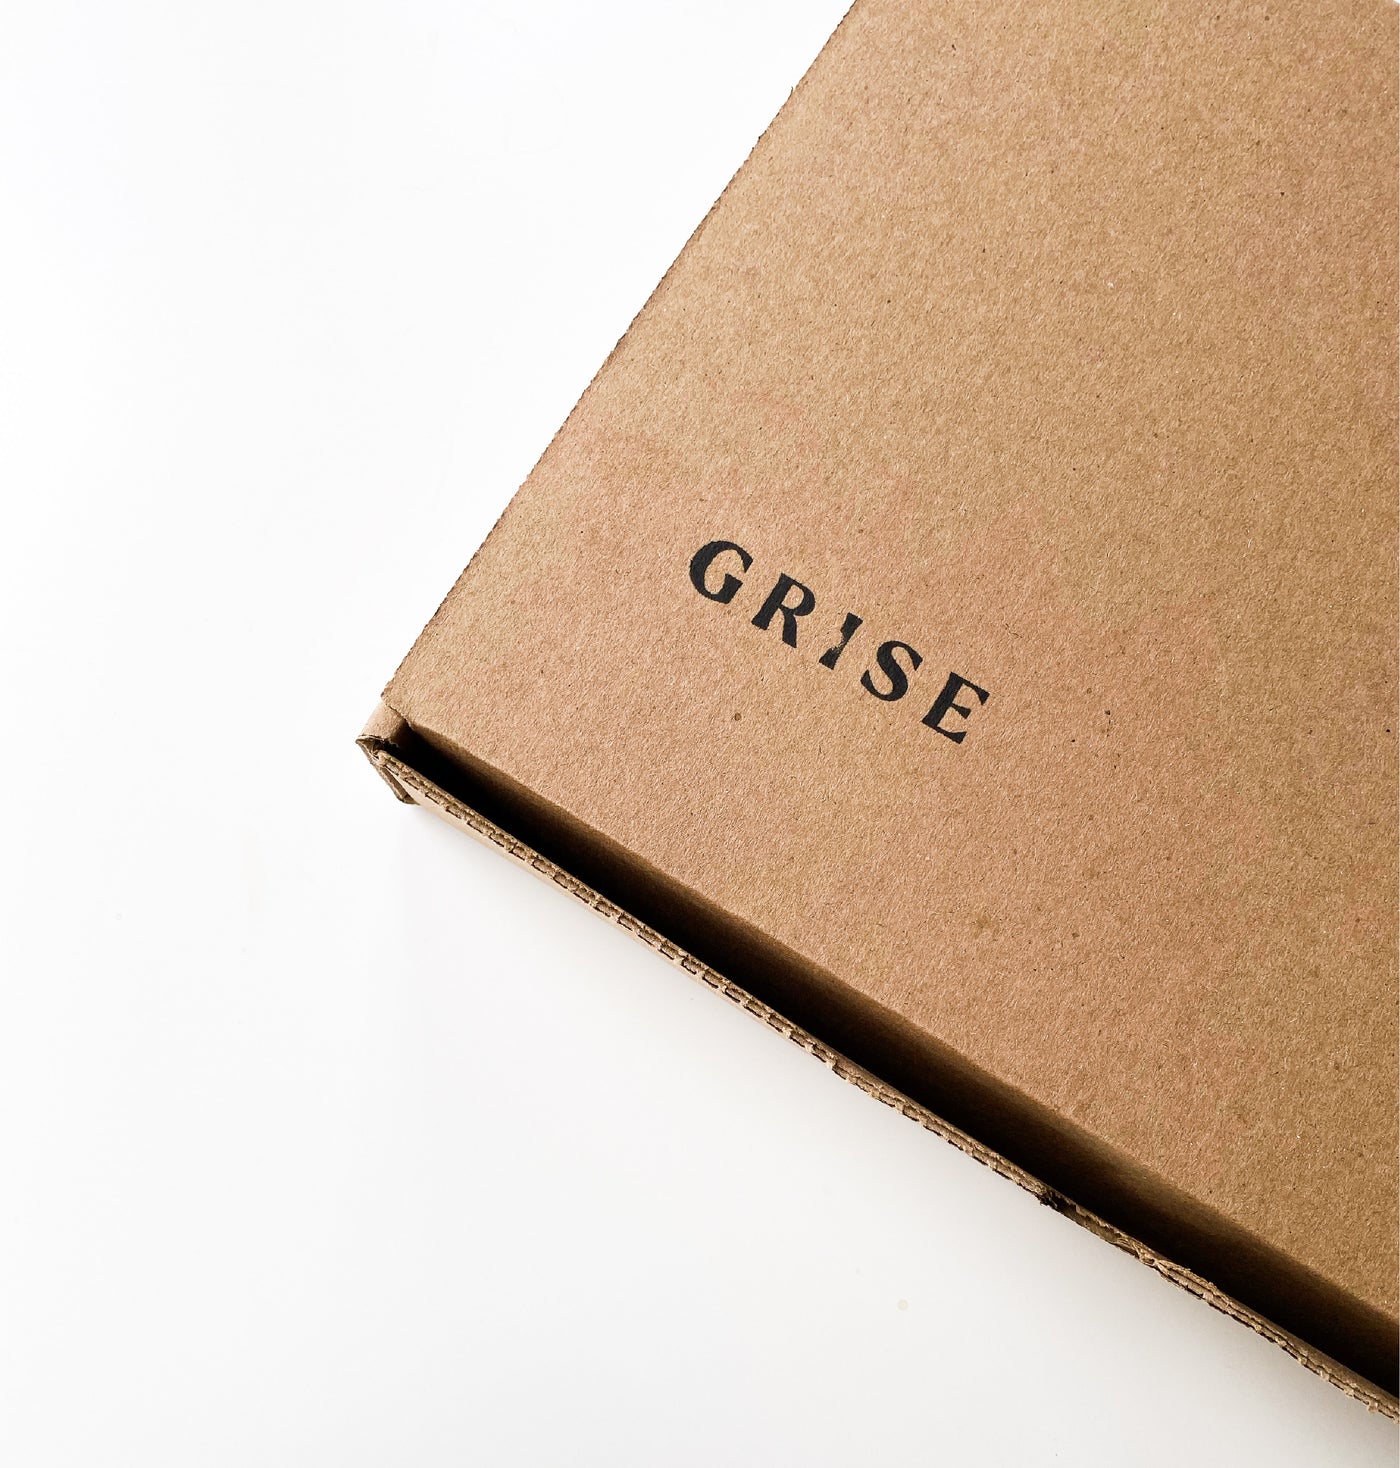 Cardboard box with Grise logo